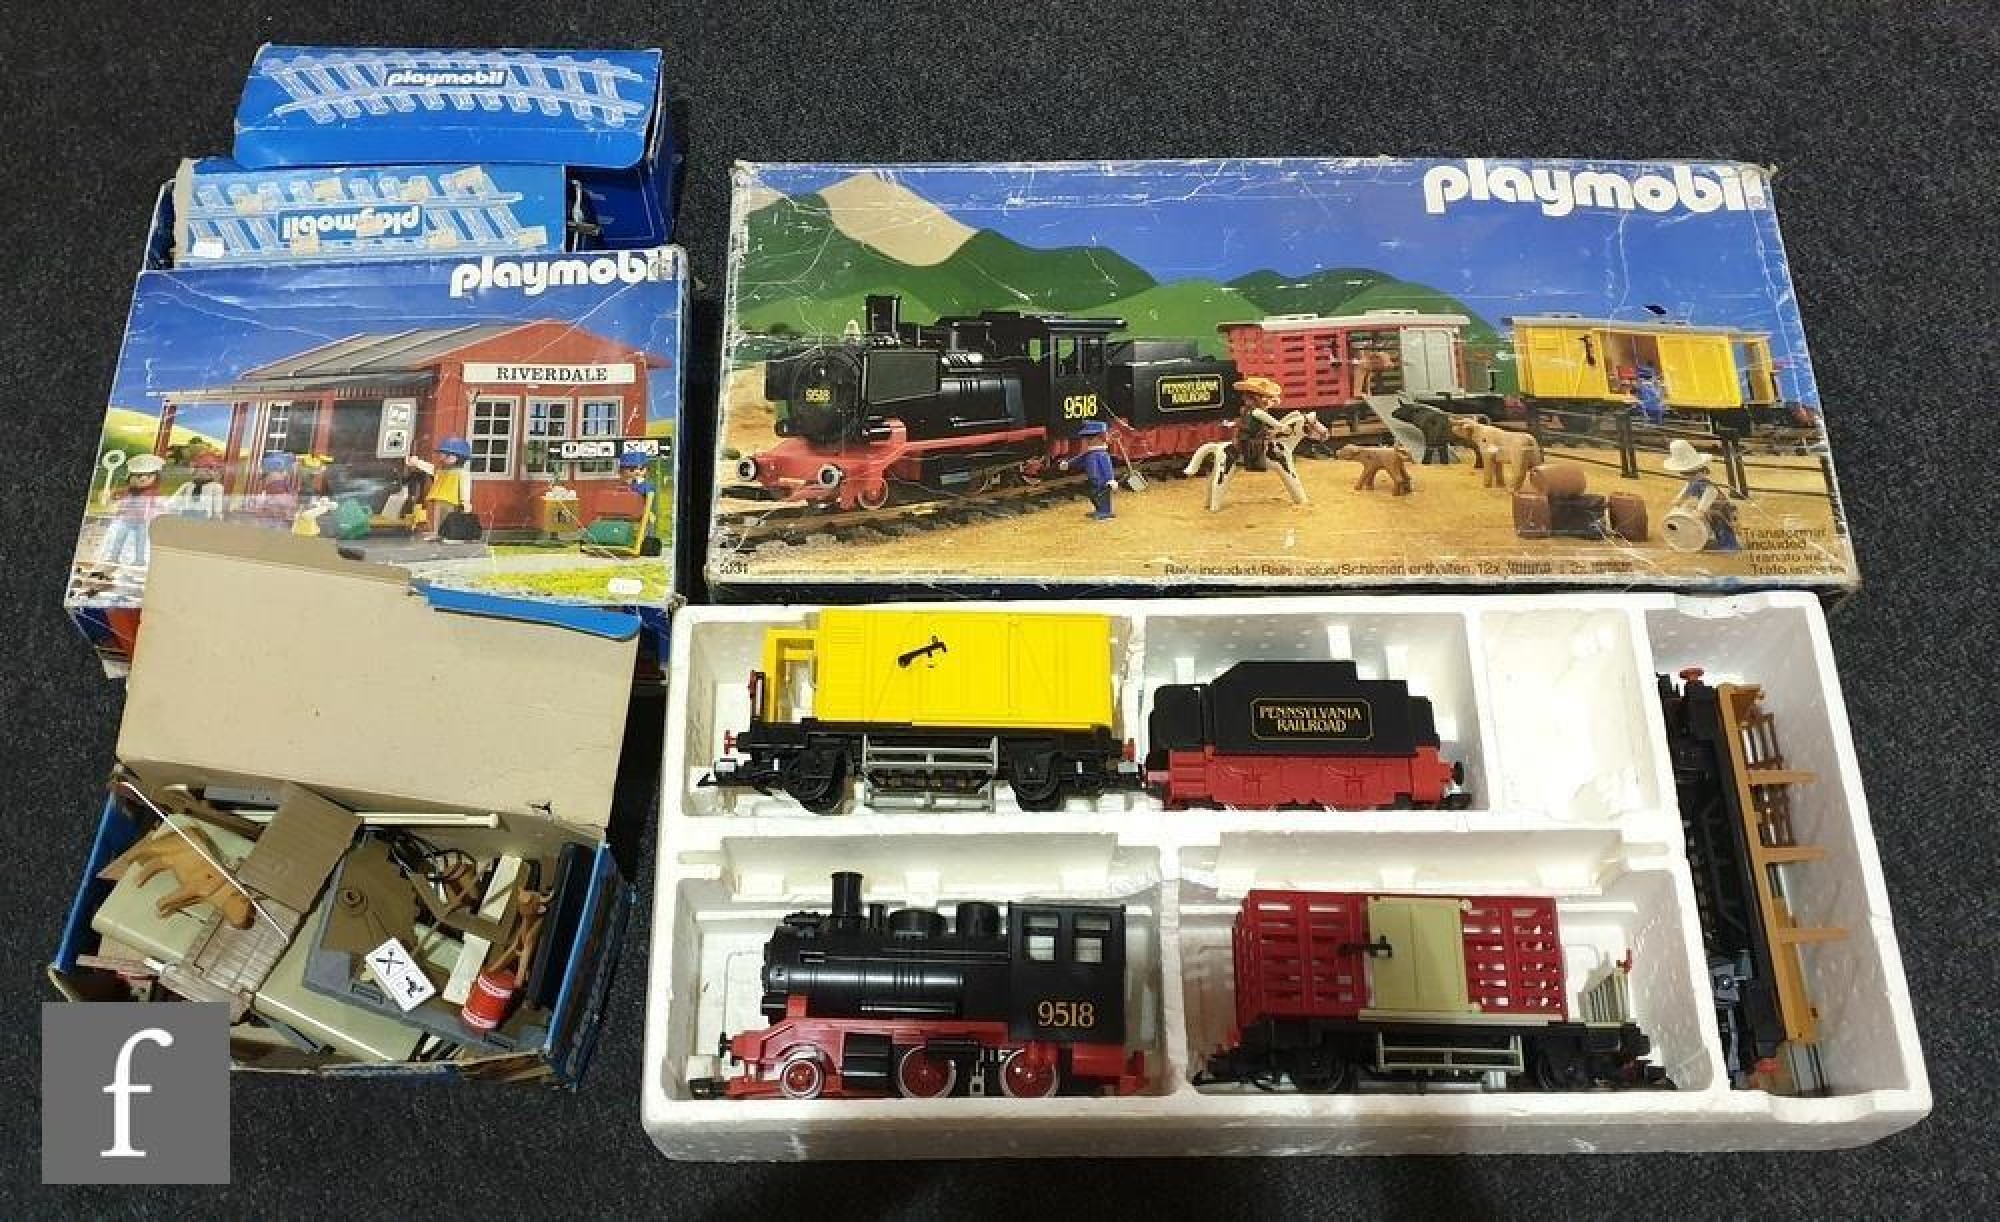 Playmobil 'G' gauge - 4031 Pennsylvania Railroad train set with 2